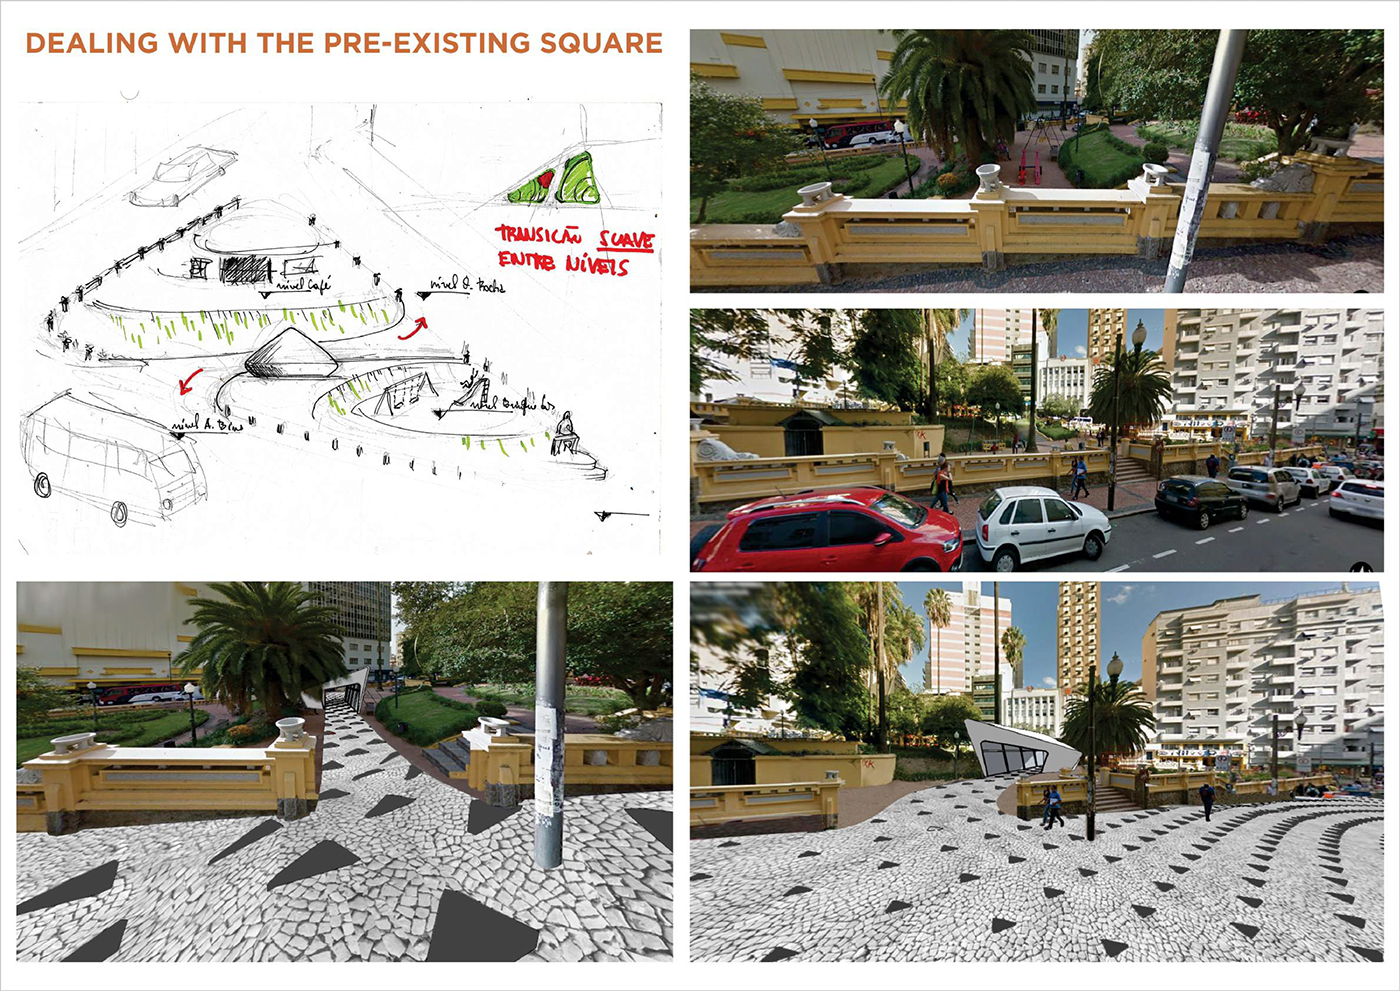 Urban Design pedestrian zone urban planning urbanism   porto alegre historic district square street furniture